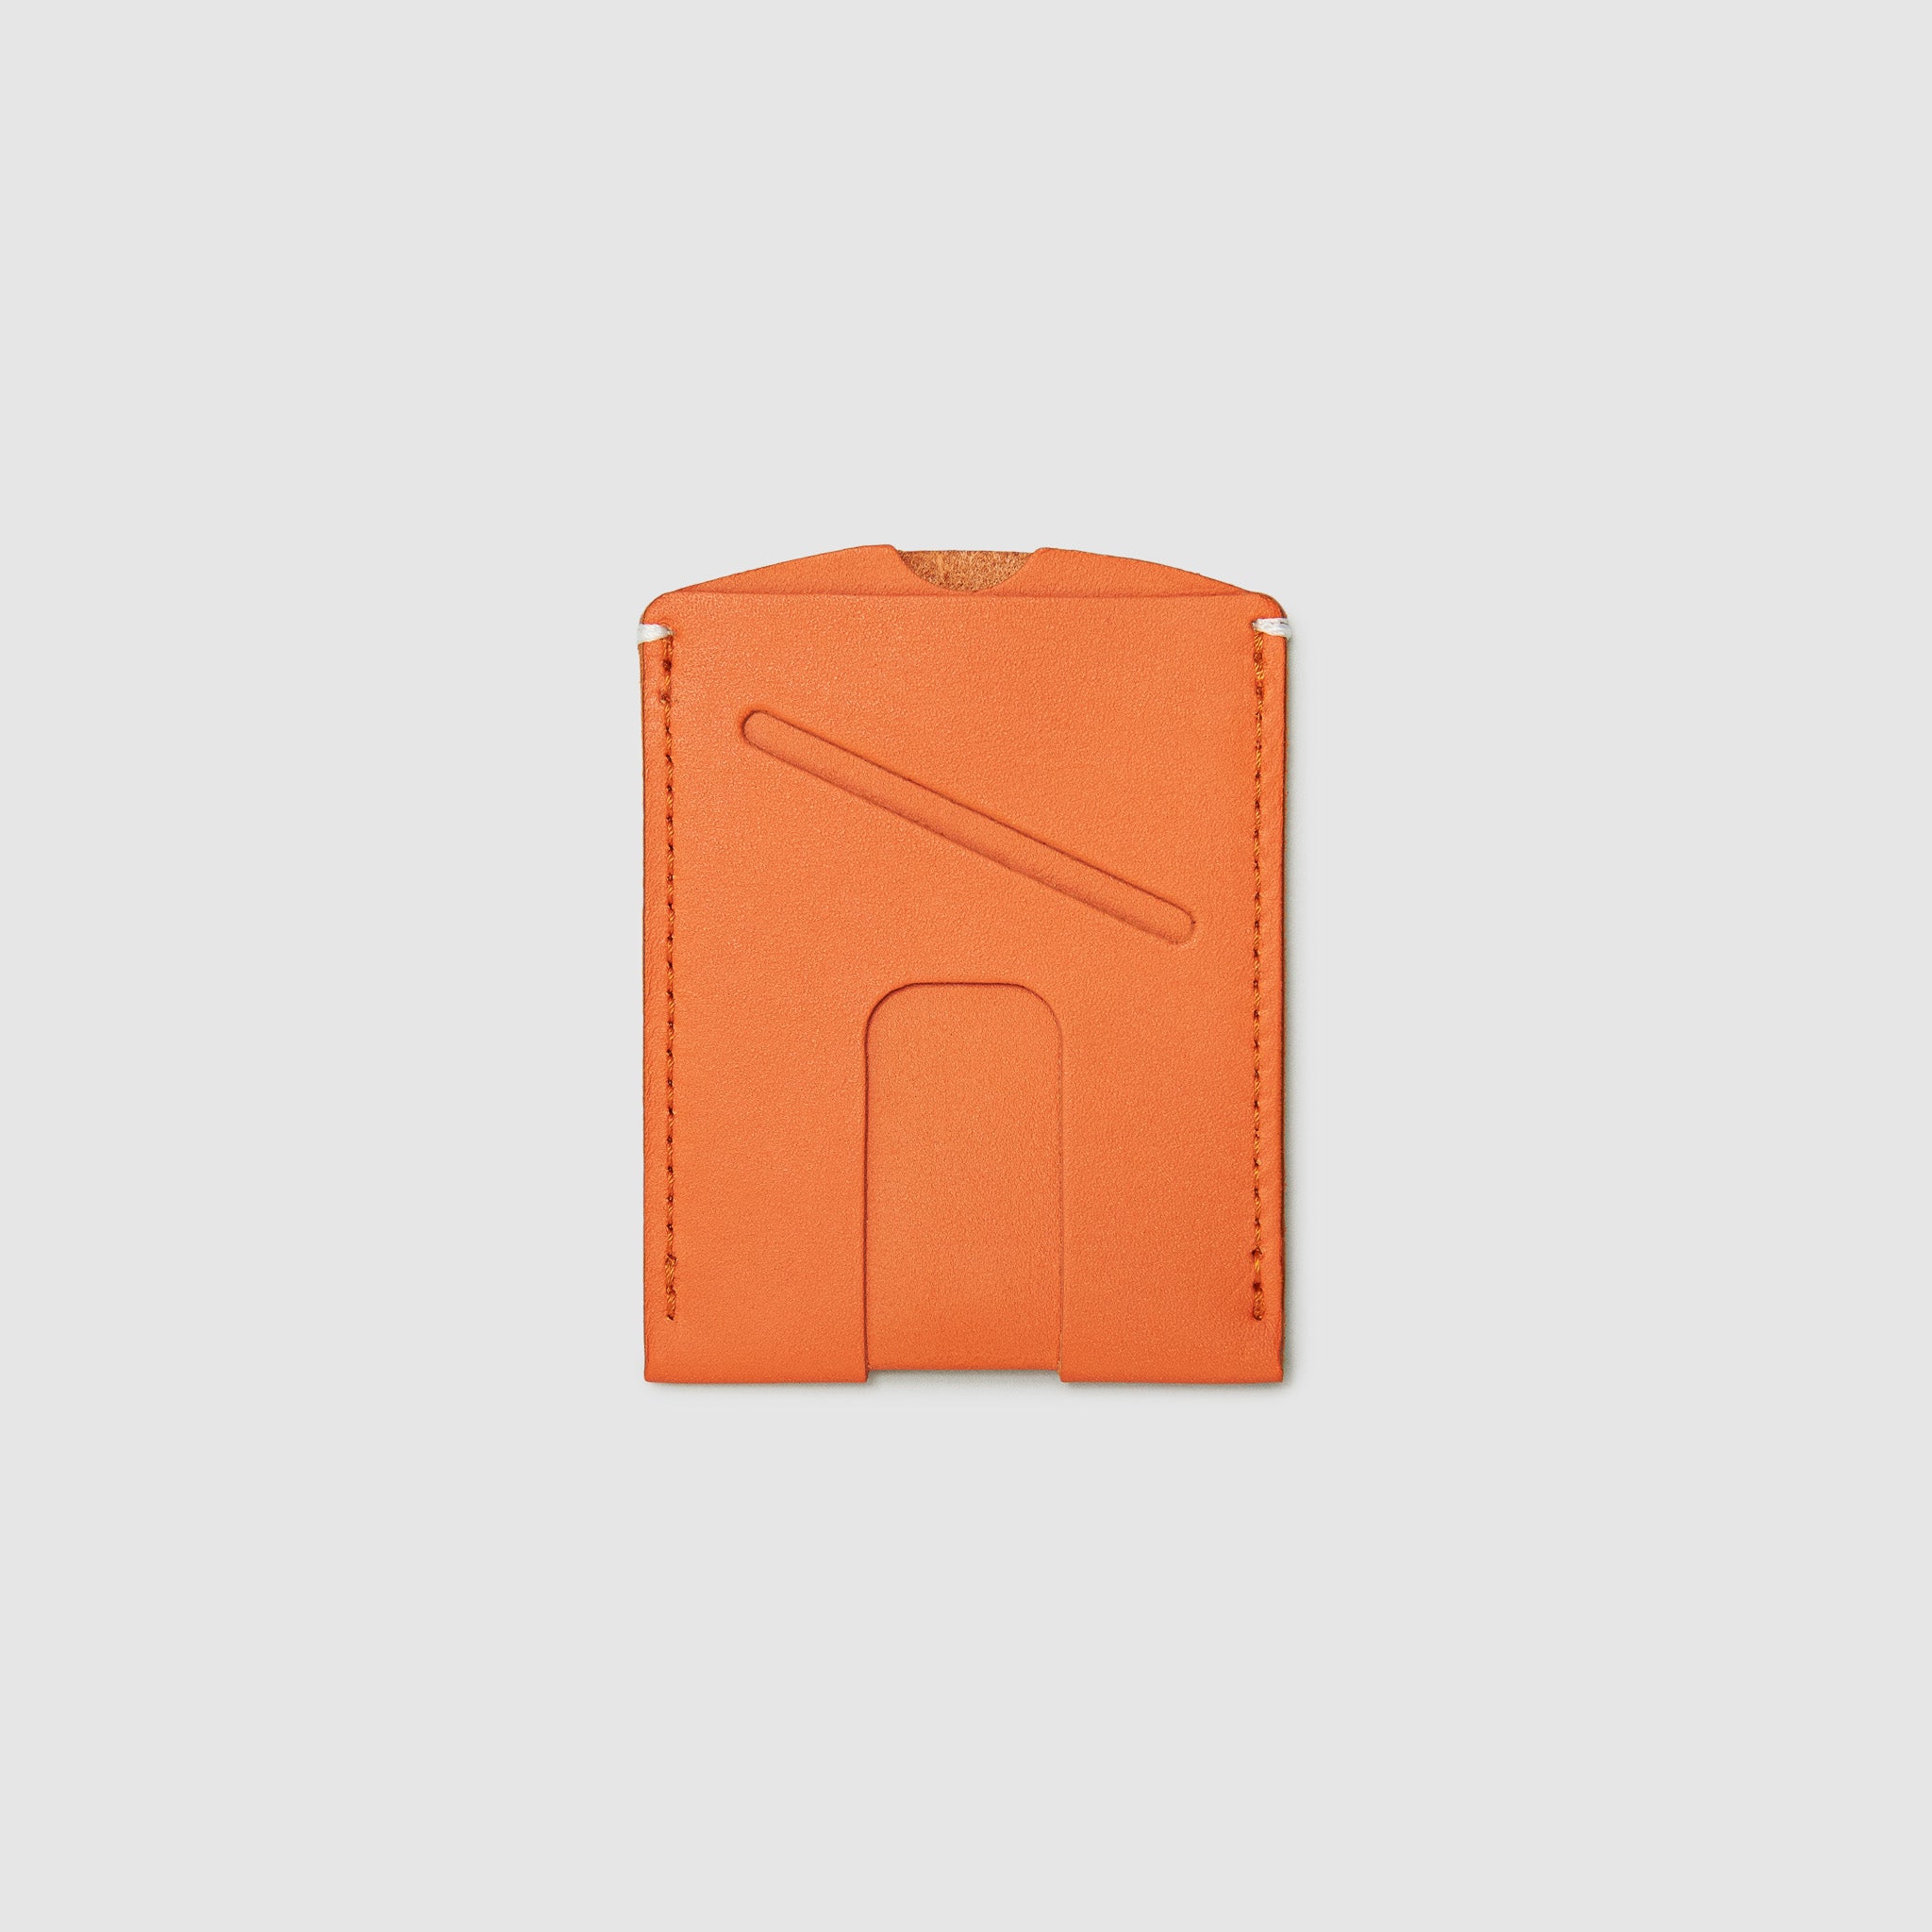 Anson Calder Card Holder Wallet french calfskin leather with cash slot _fshd-orange